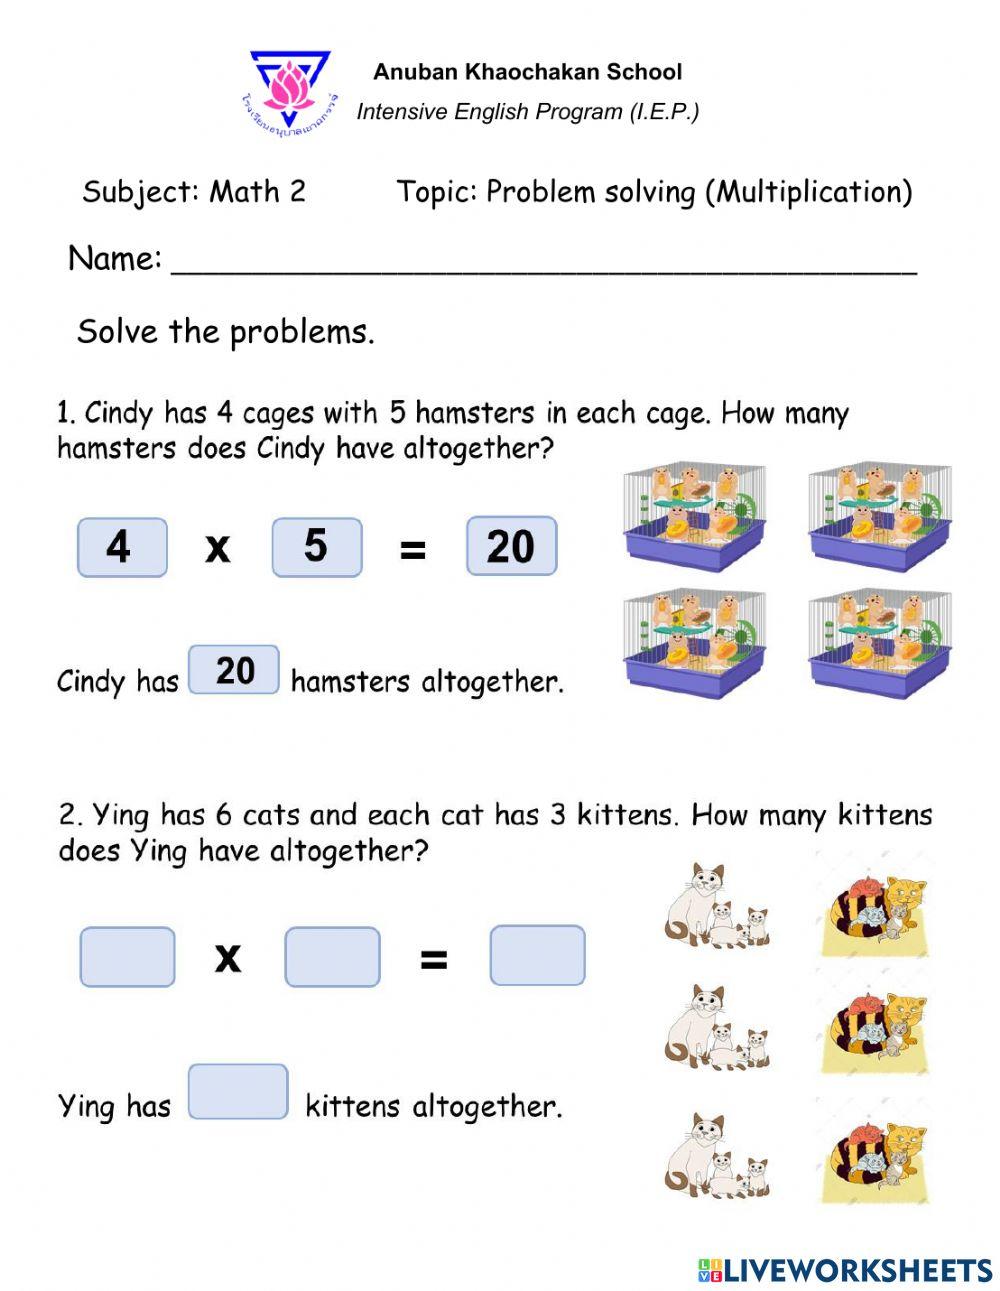 Problem solving using multiplication